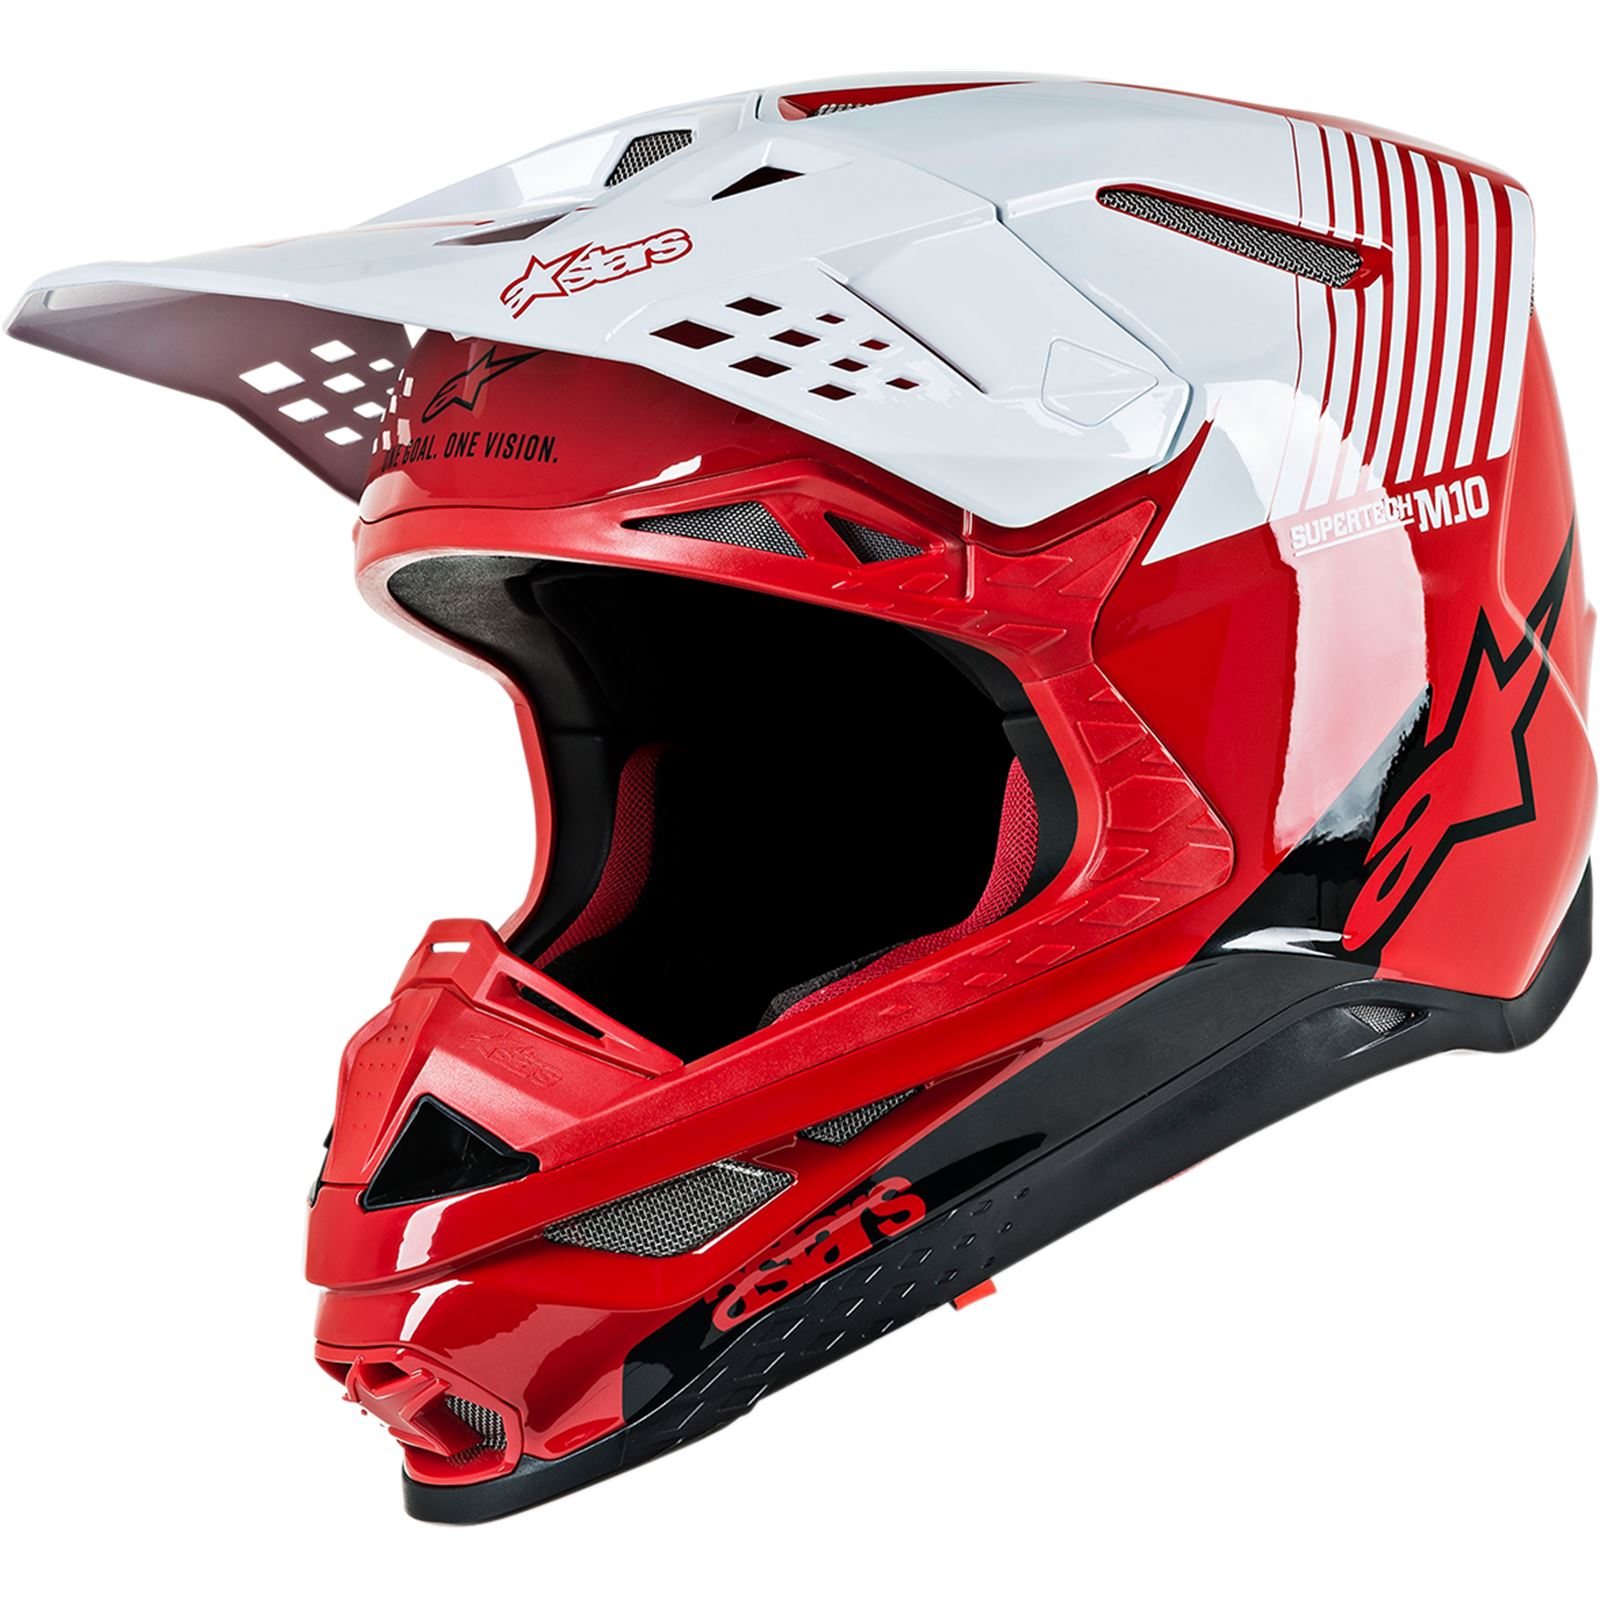 Alpinestars Supertech M10 Helmet - Dyno - MIPS - Red/White - X-Large